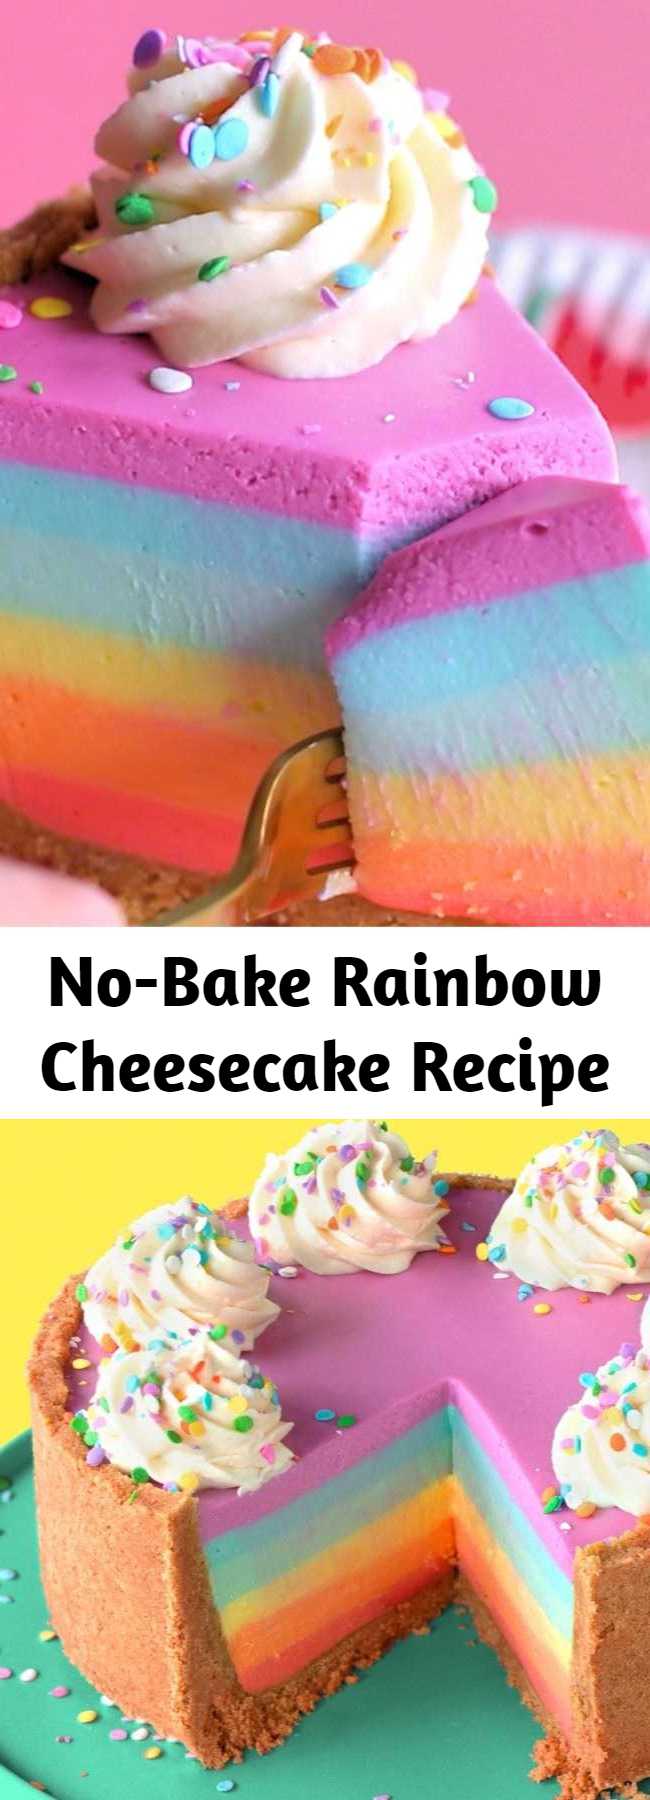 No-Bake Rainbow Cheesecake Recipe - A no-bake white chocolate rainbow cheesecake that's super simple to make!